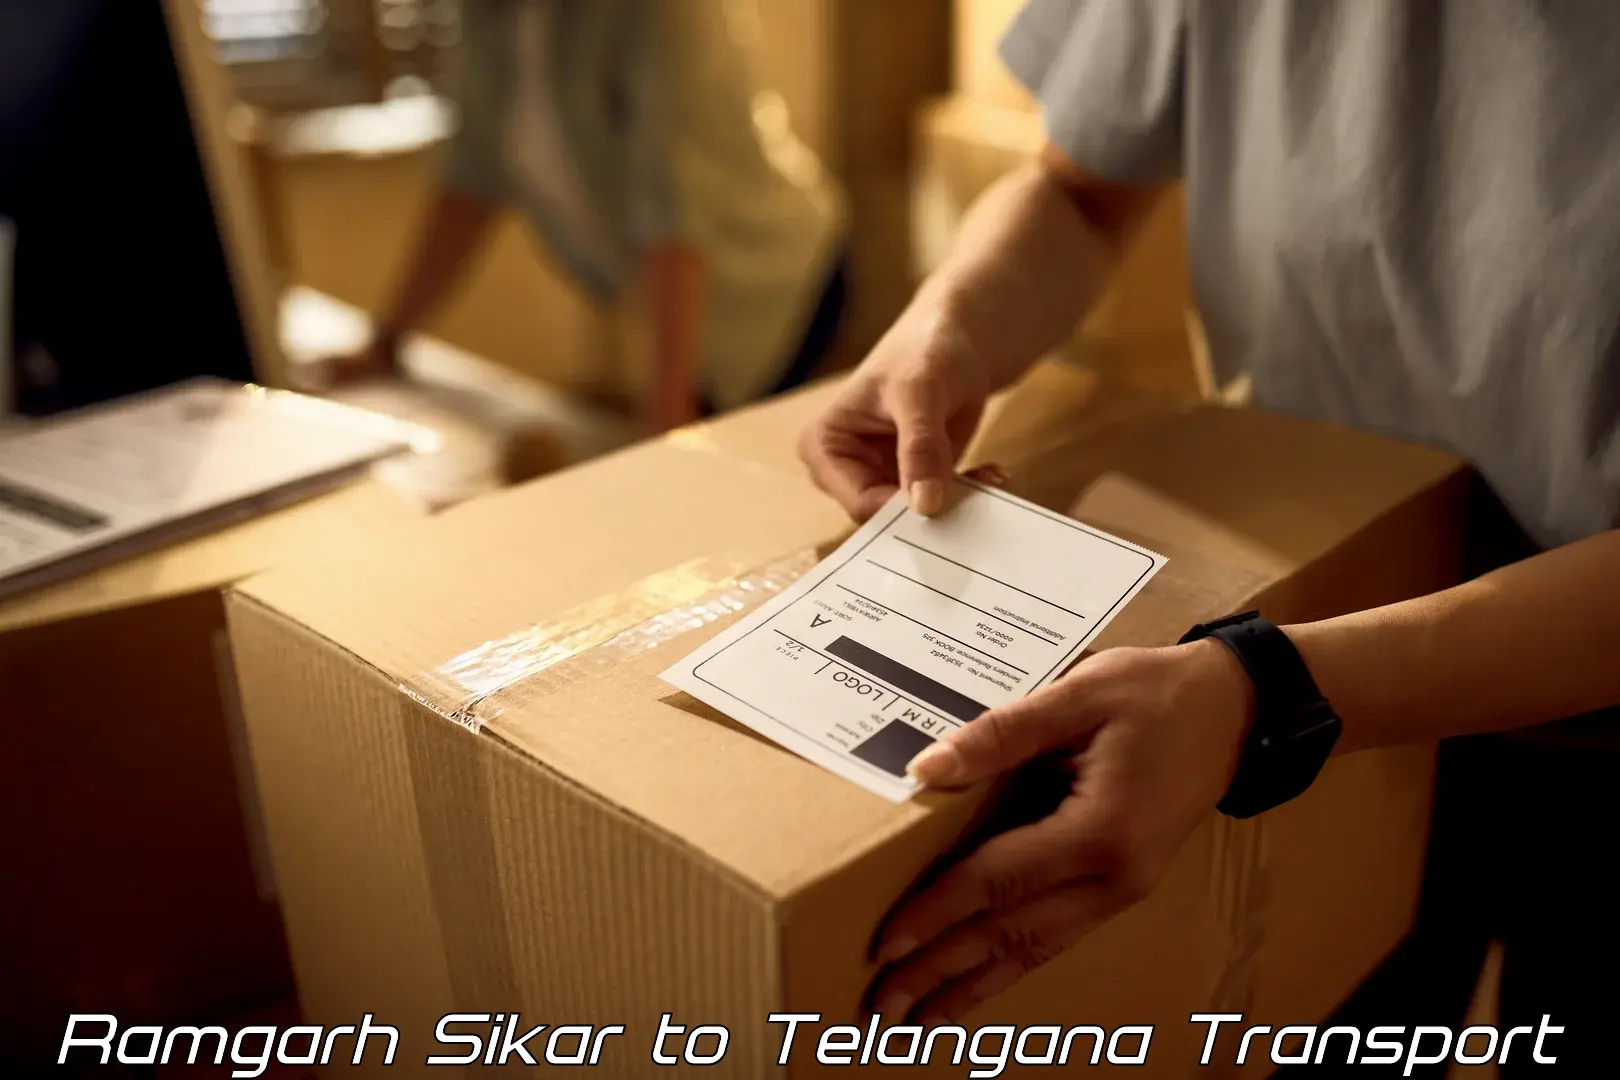 Delivery service Ramgarh Sikar to Dornakal